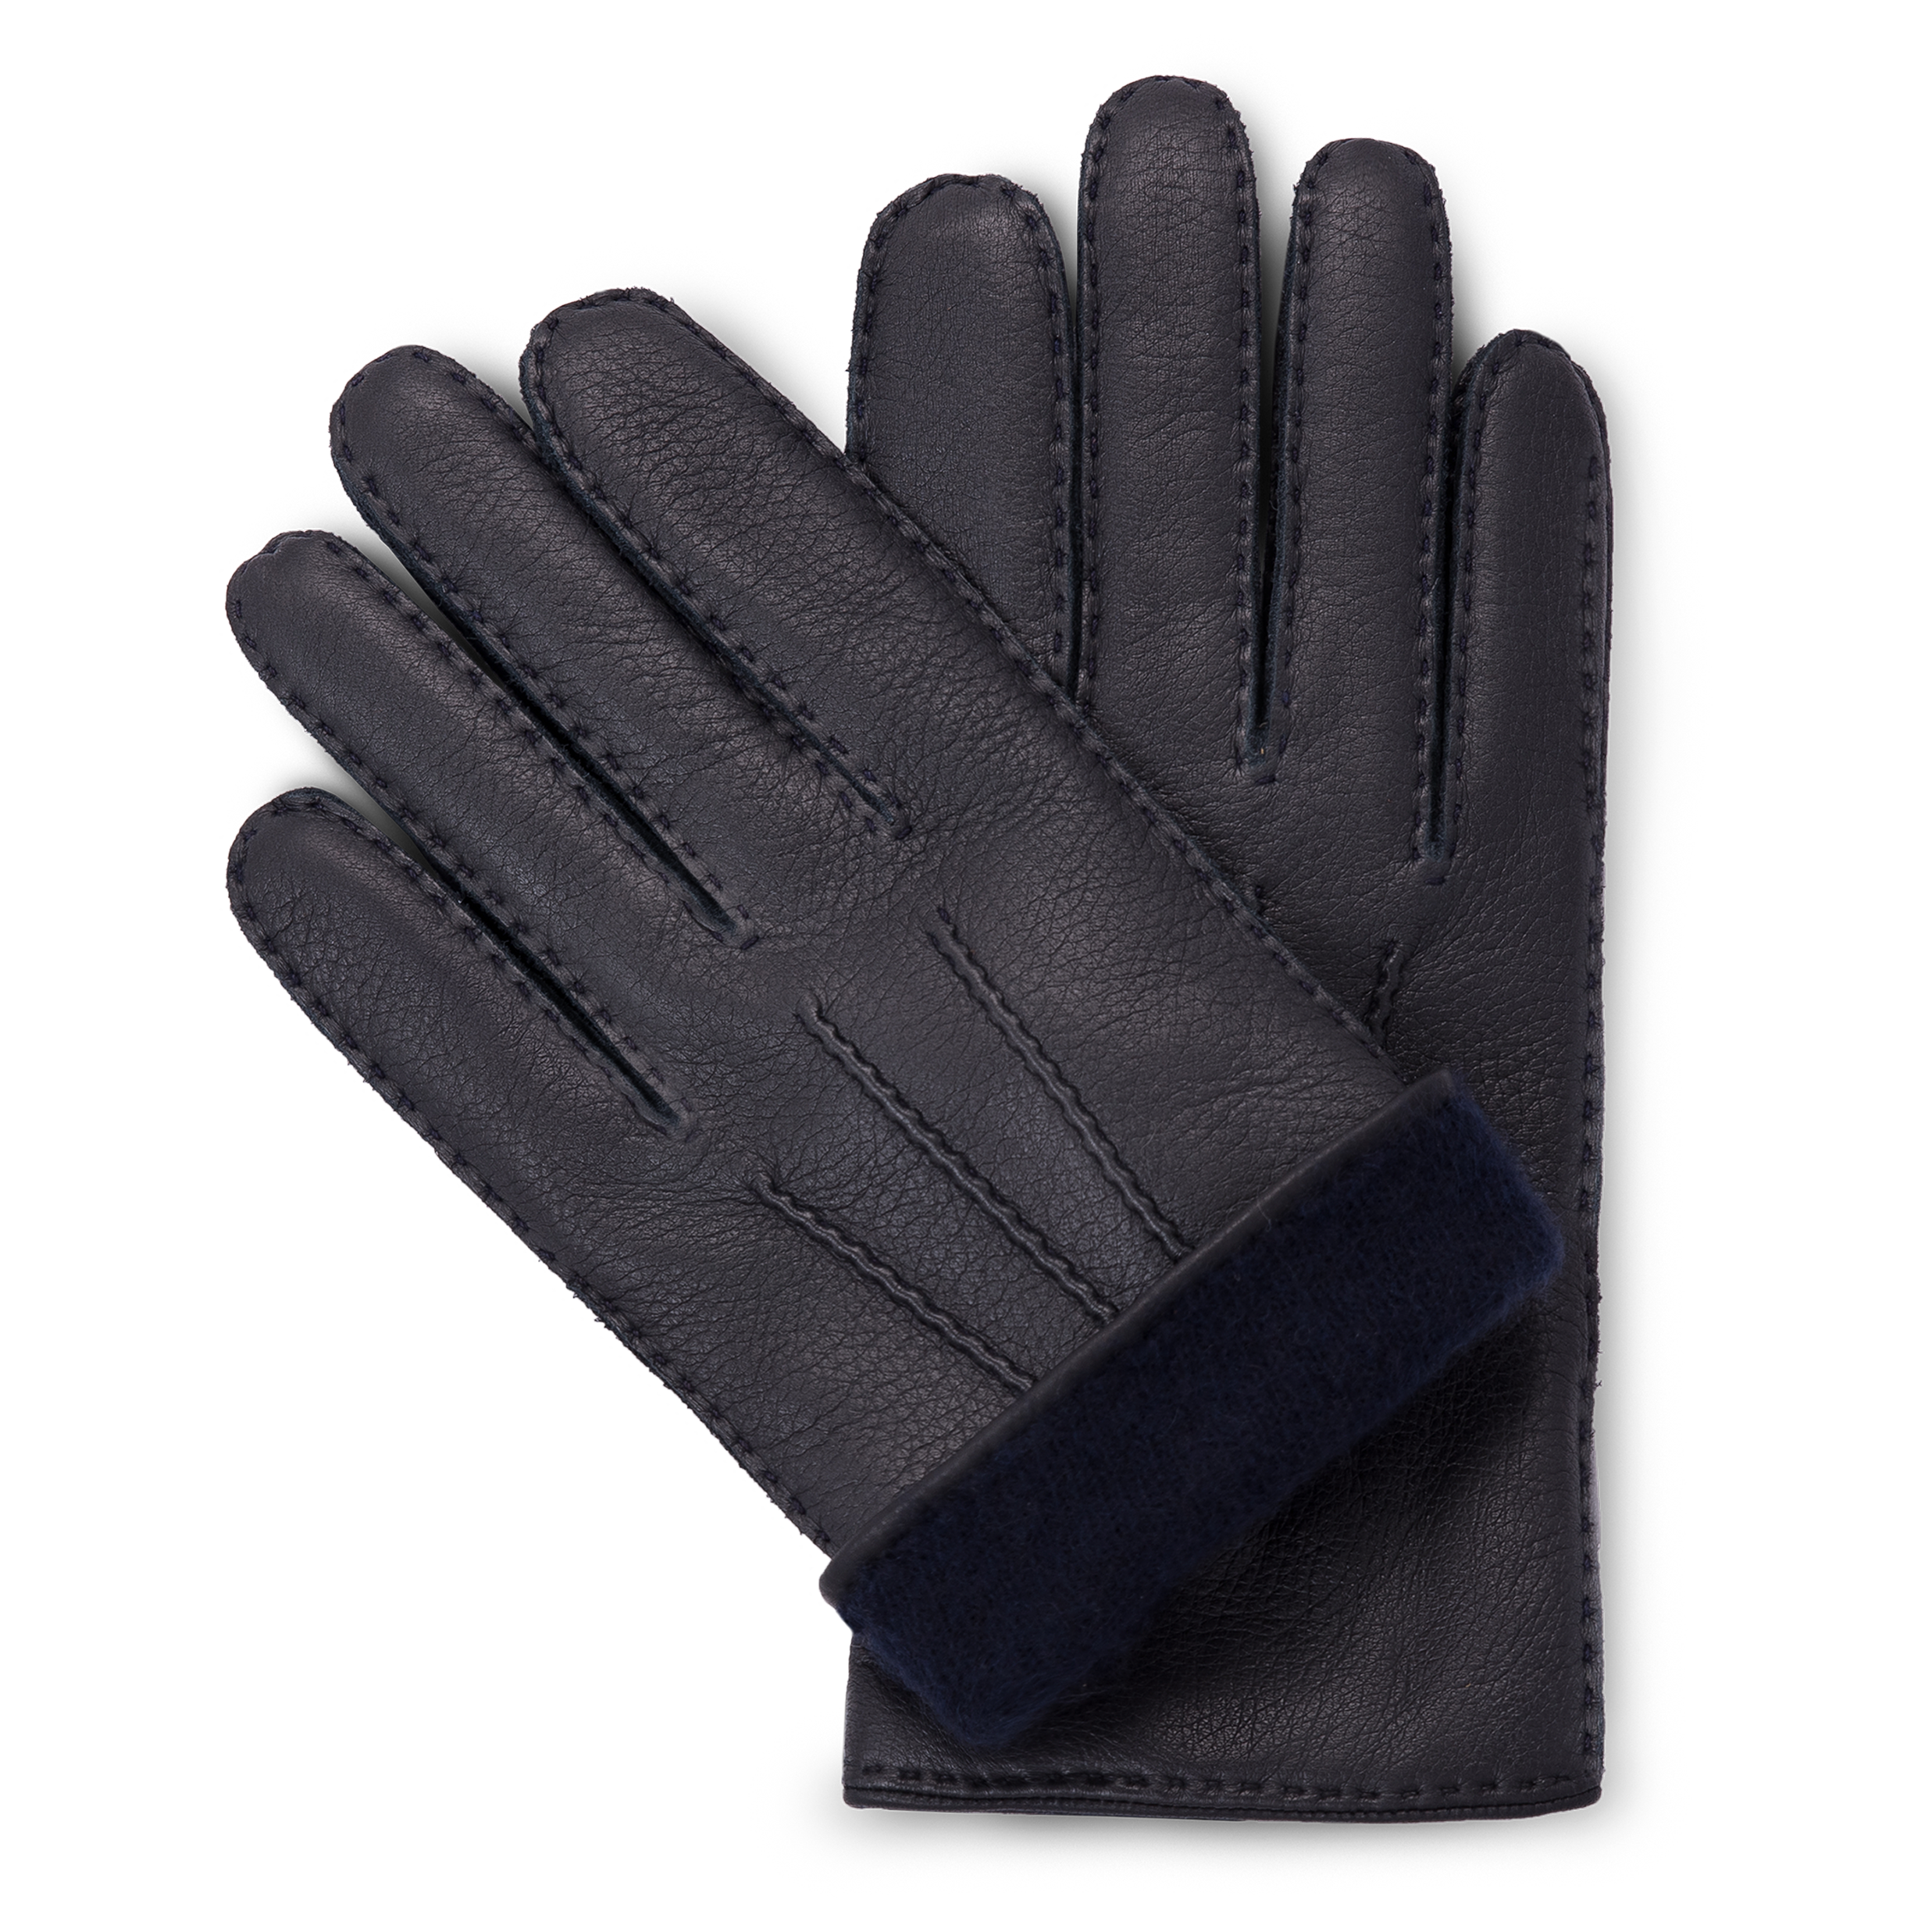 Helsinki - black moose leather gloves navy blue lining – Nordic Moose